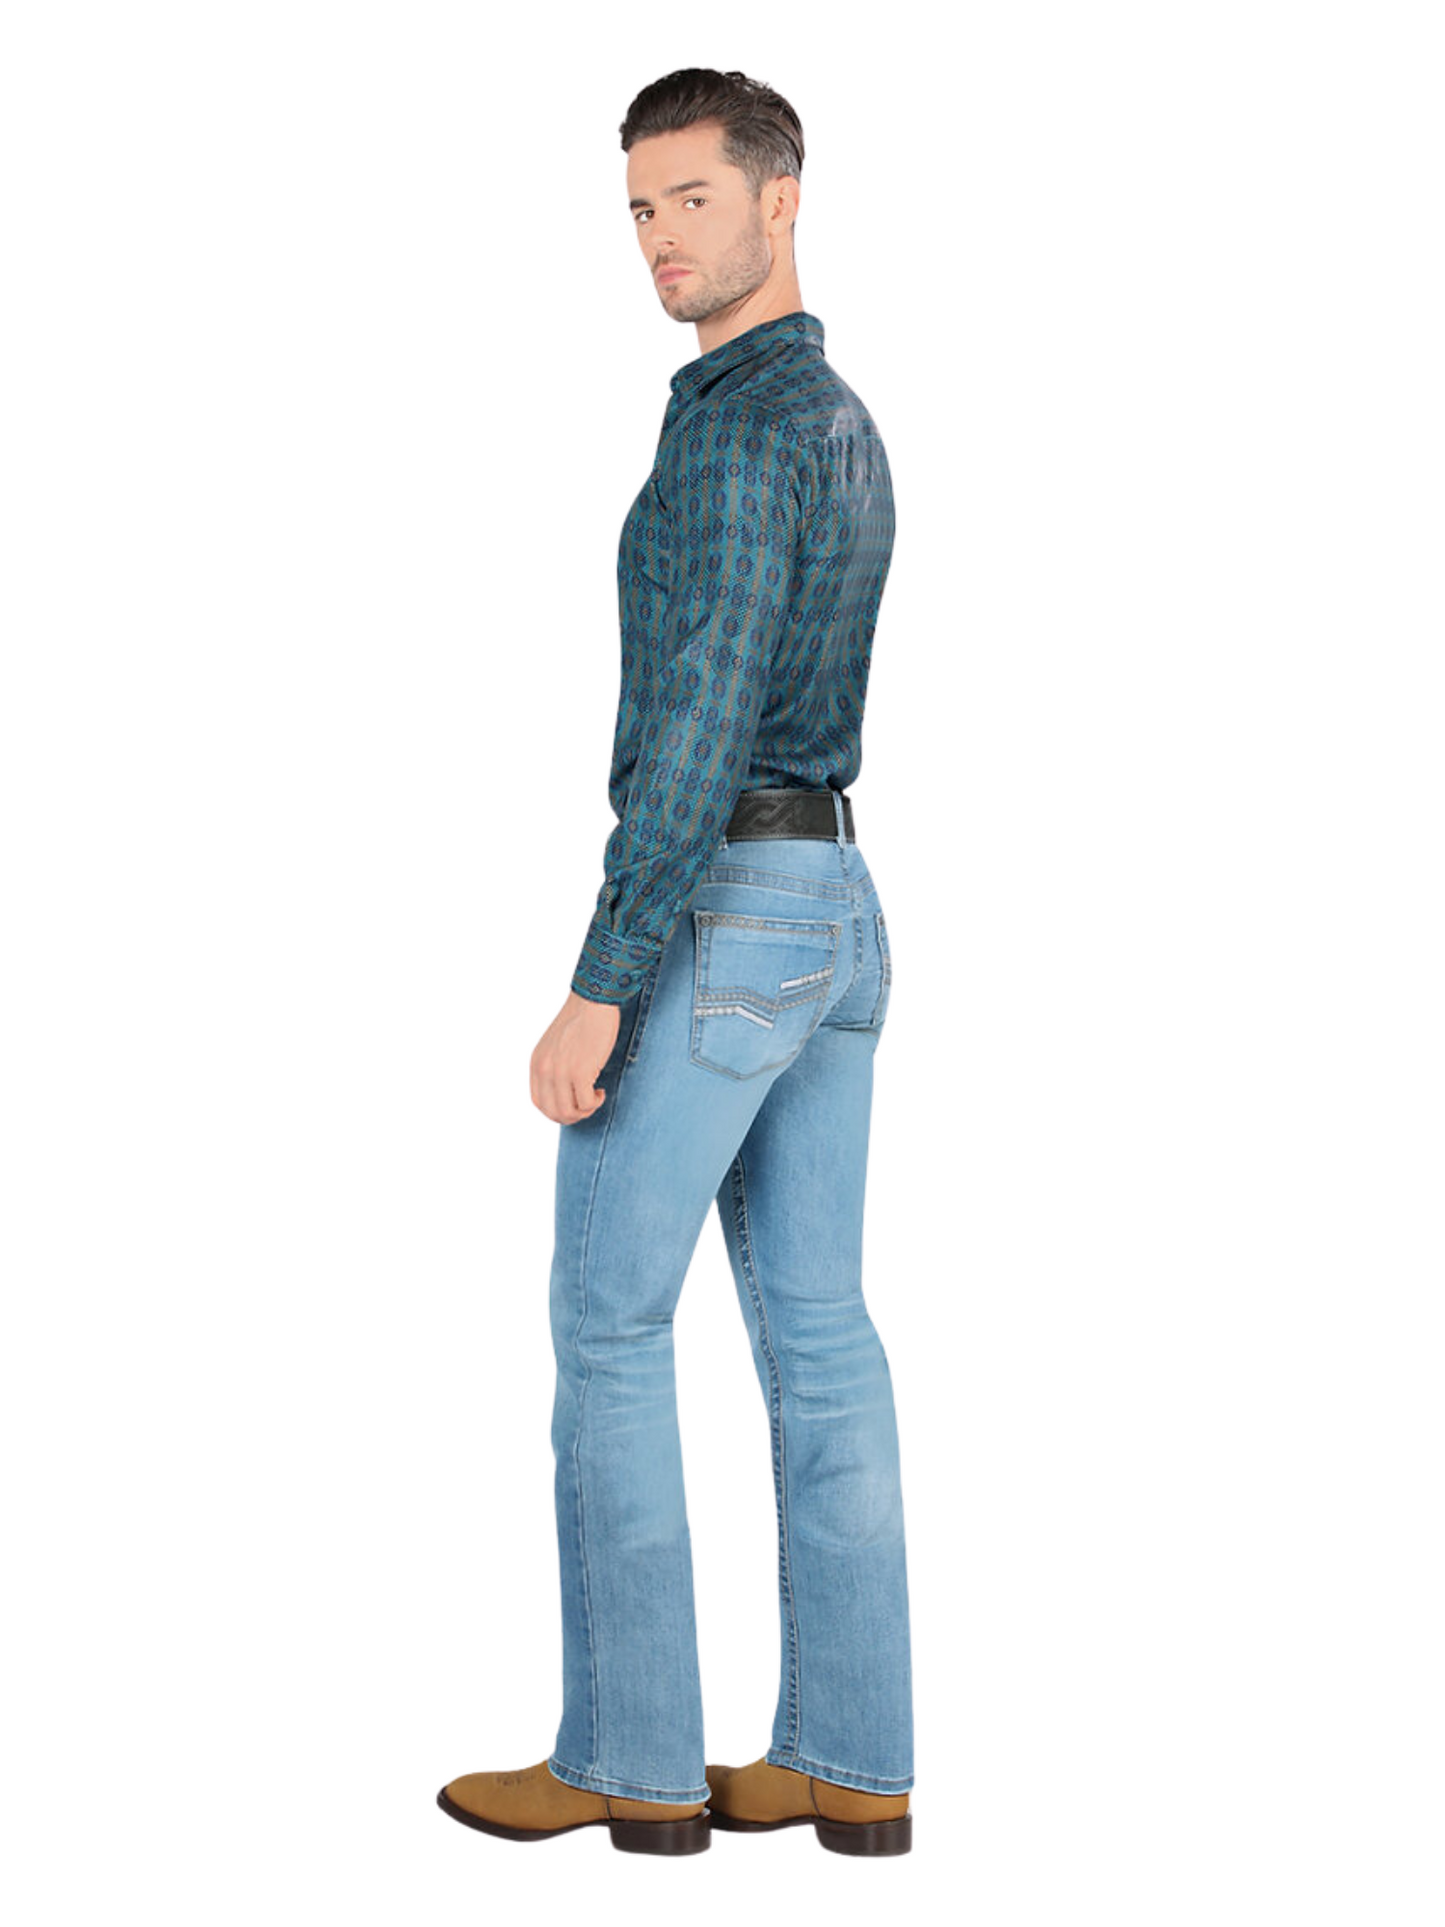 Stretch Denim Jeans for Men 'Montero' - ID: 4601 Denim Jeans Montero